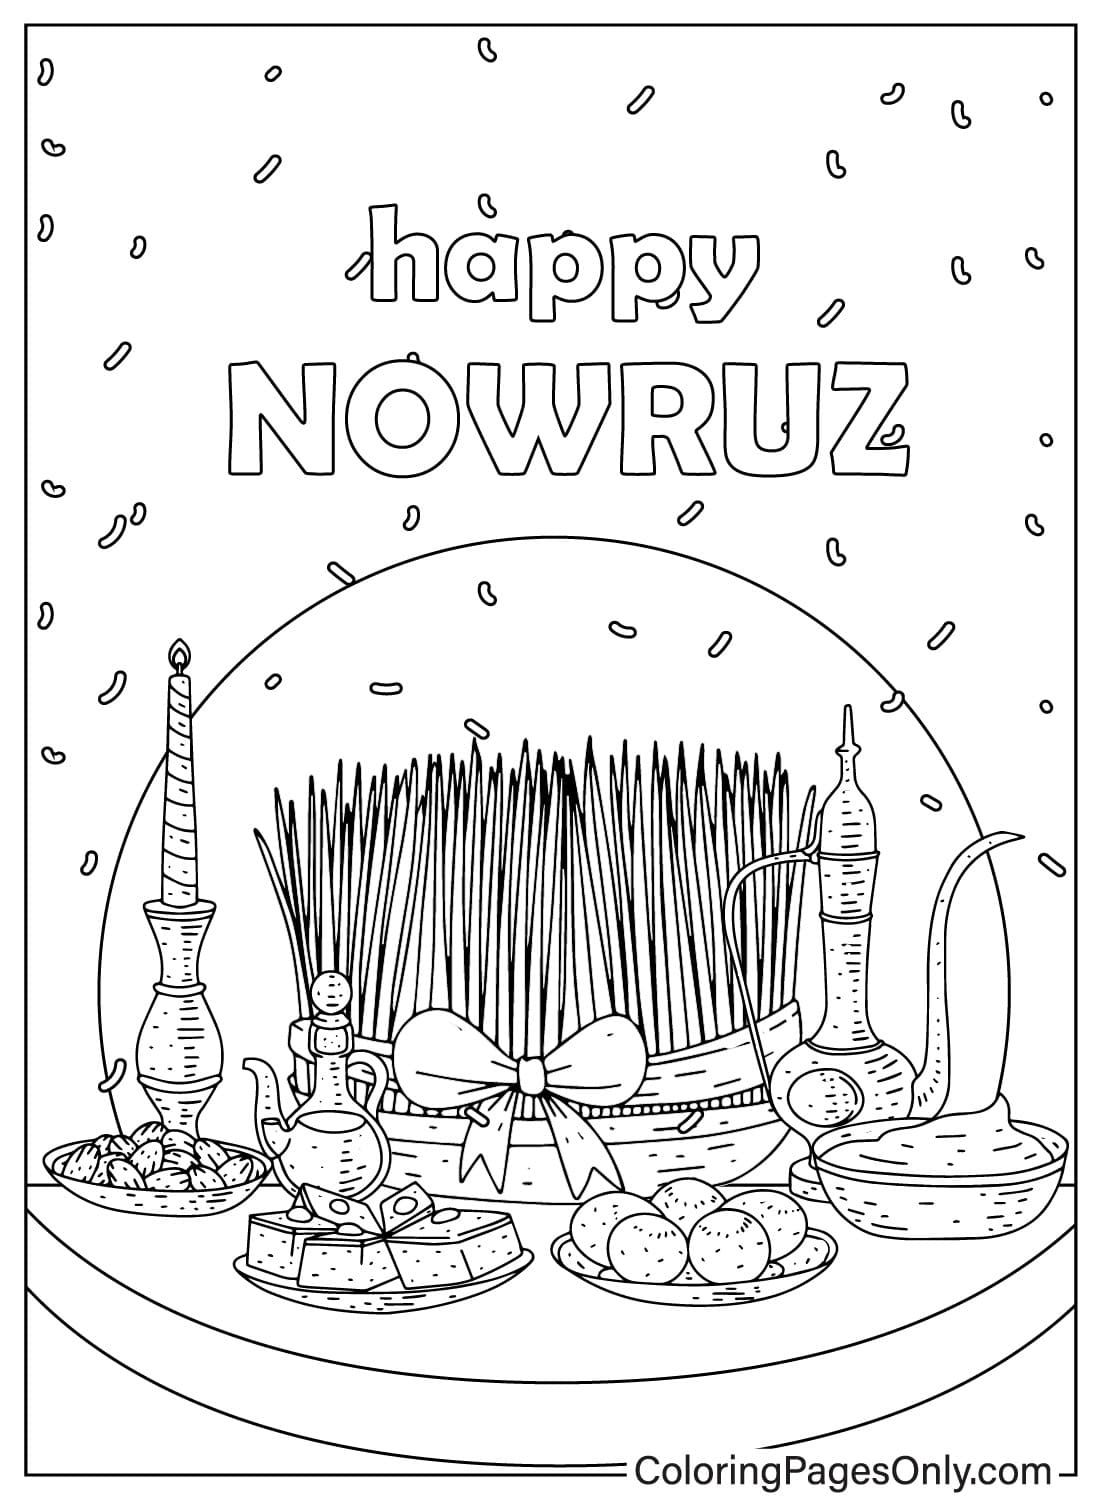 Fröhliches Nowruz-Malblatt vom Internationalen Nowruz-Tag